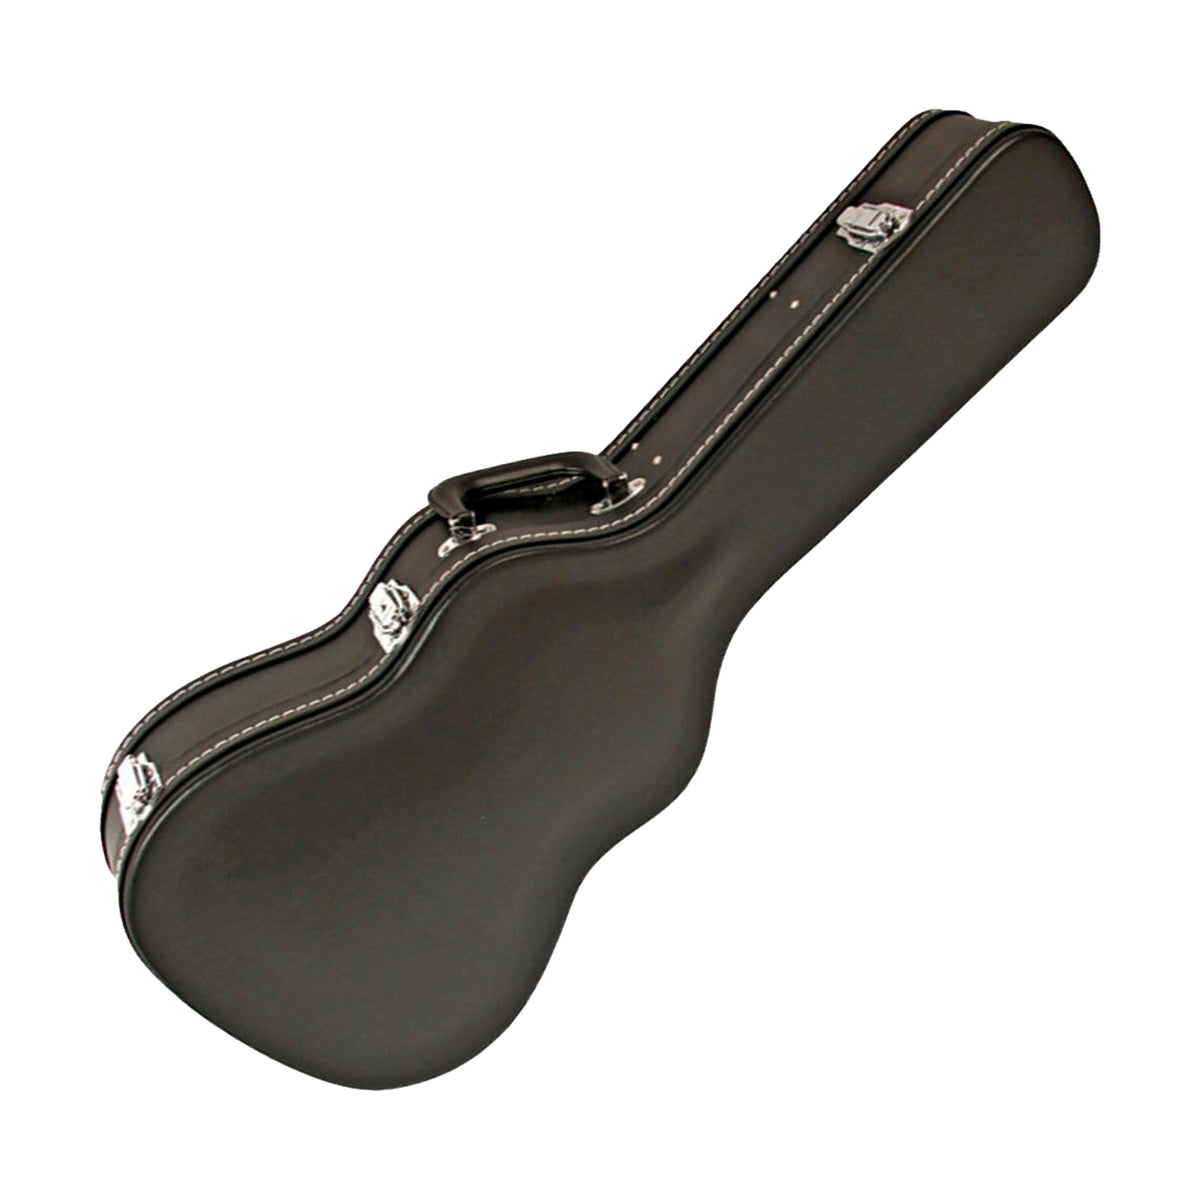 V-Case 3/4 Size Classical Guitar Hard Case